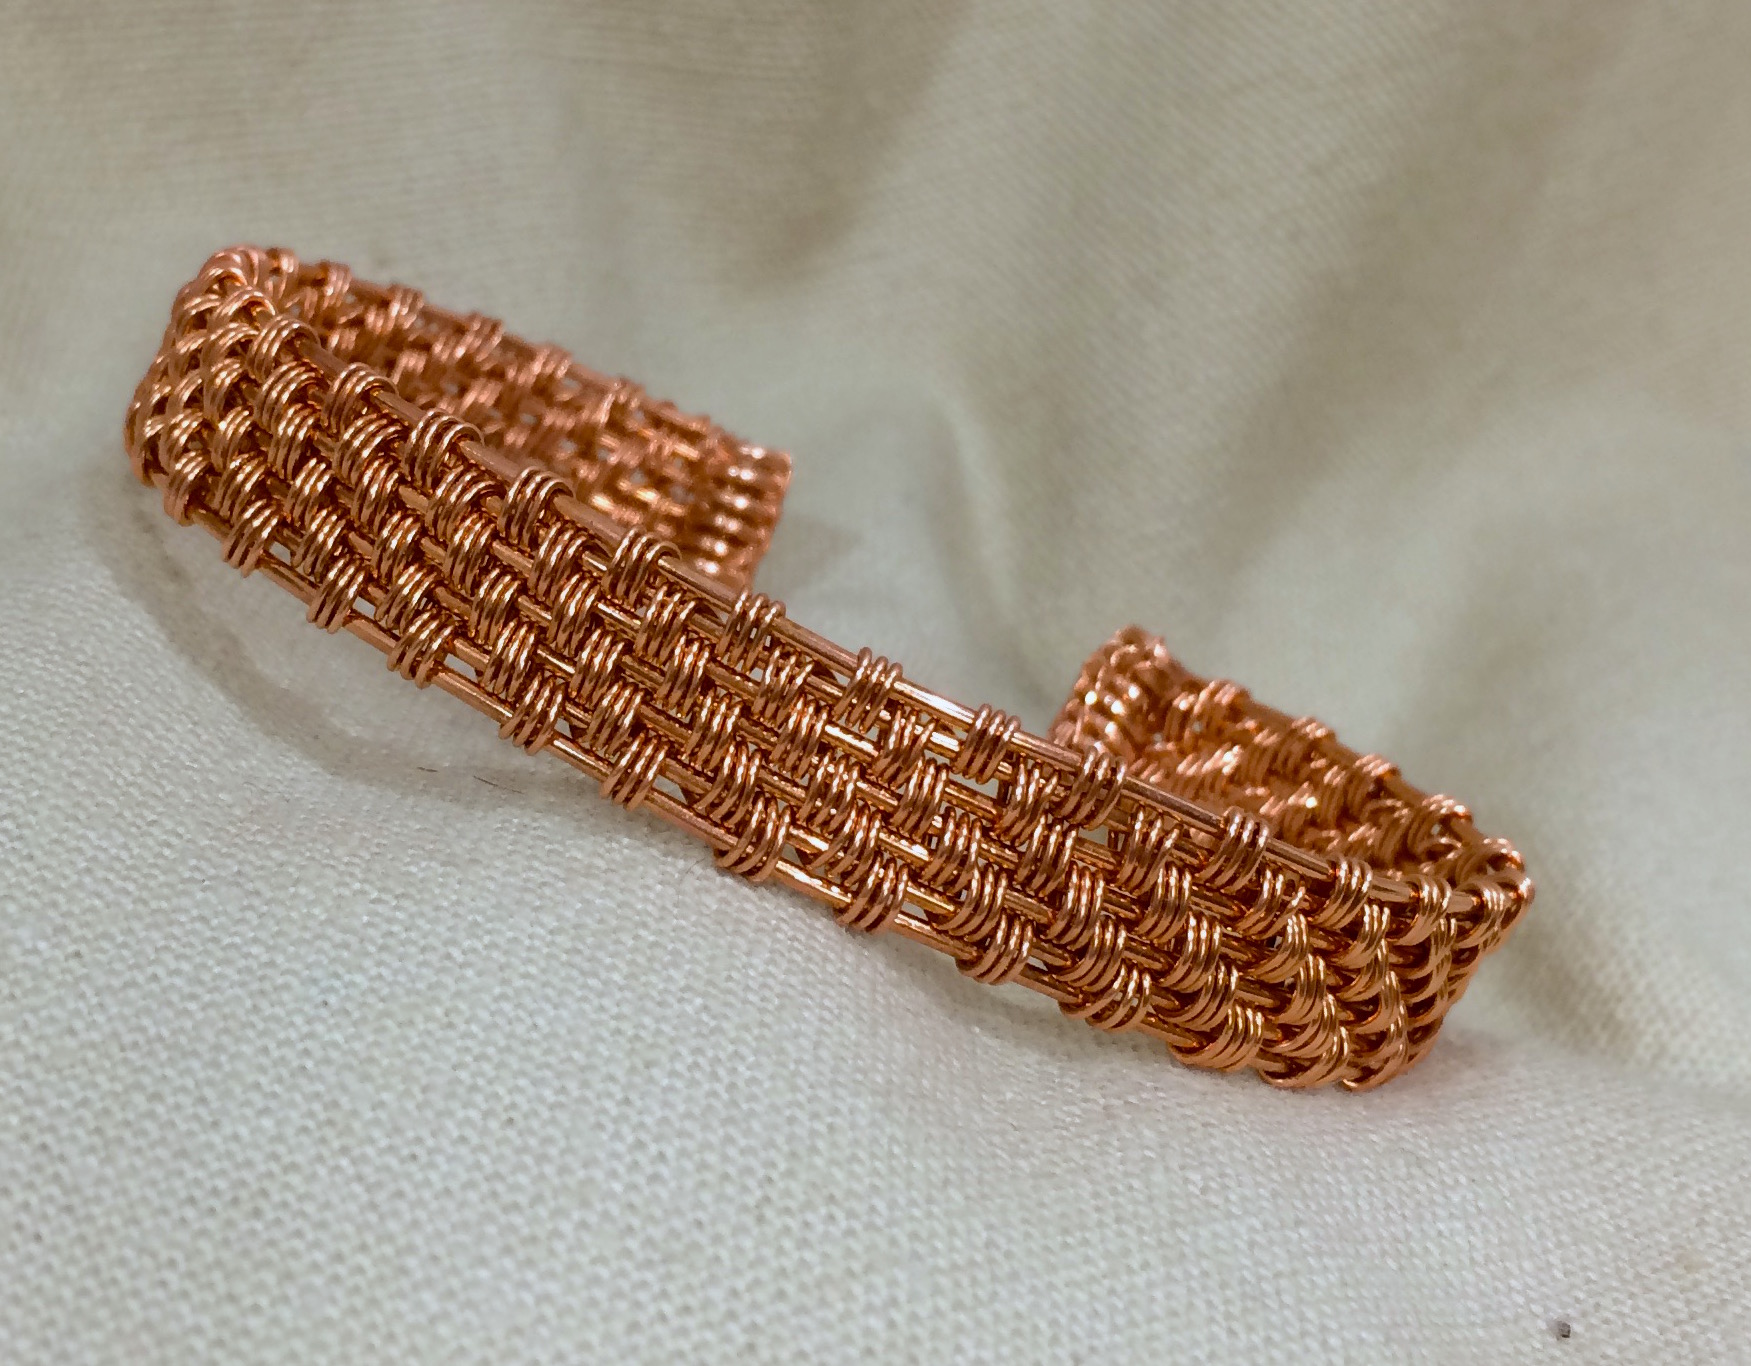 Crazy Lace Agate Gemstone Copper Handmade Wire Jewelry Adjustable Bracelet  Cuff | eBay